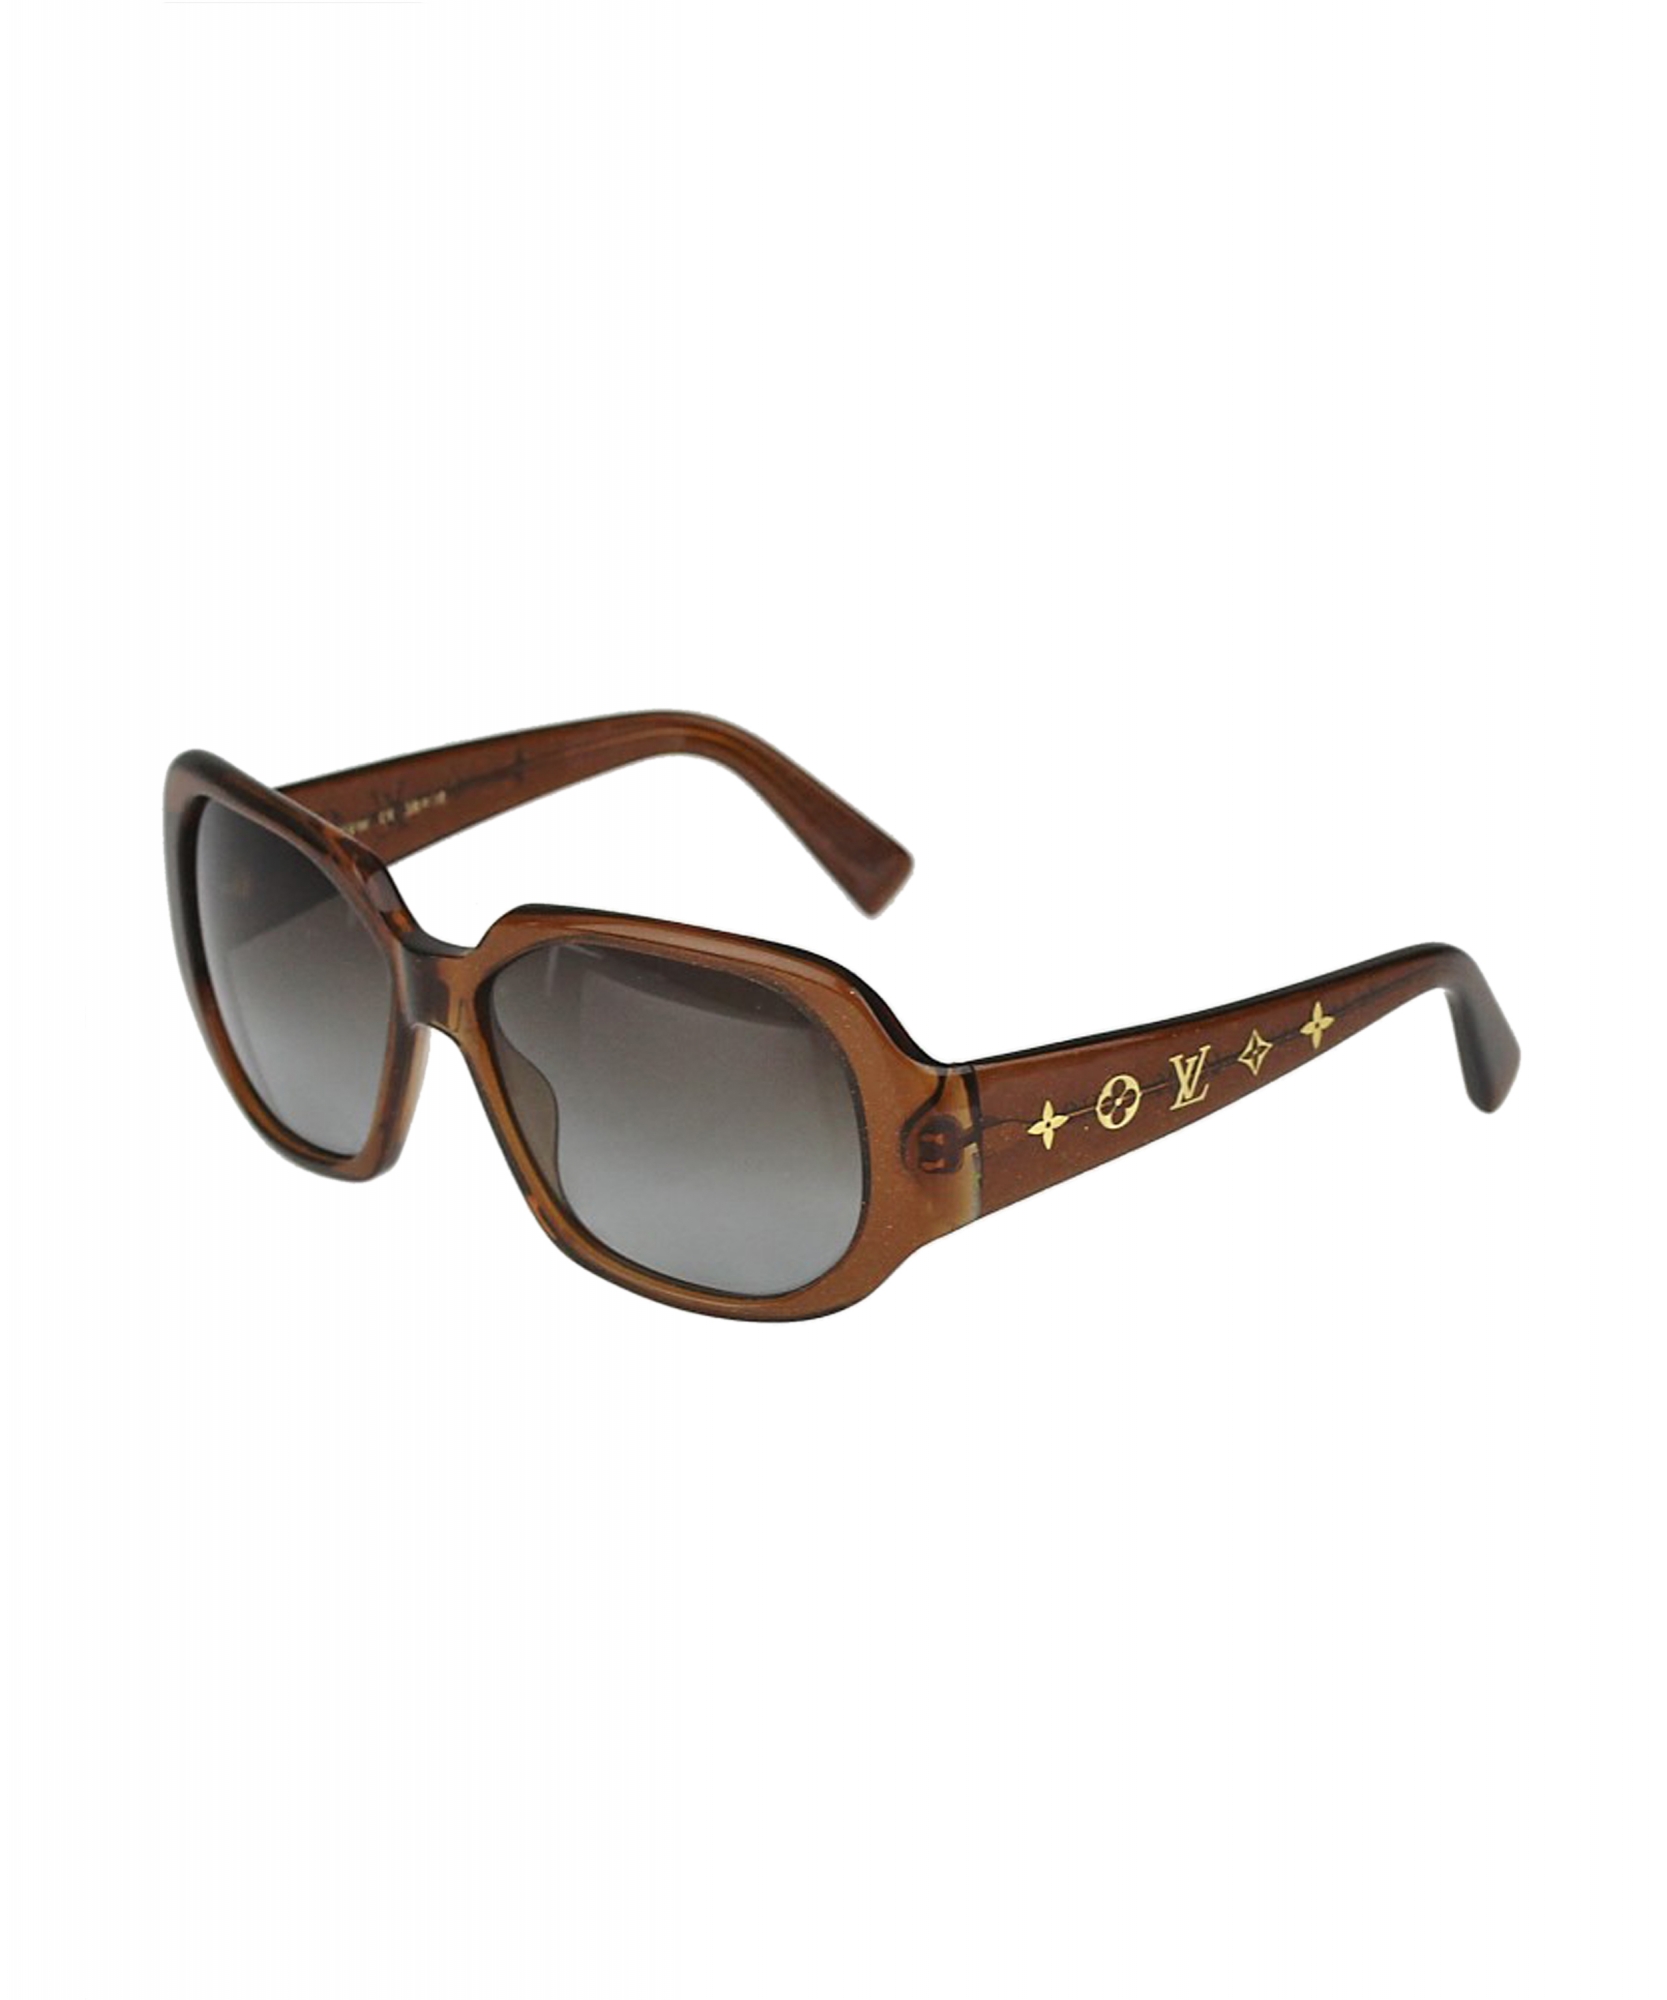 Louis Vuitton Sunglasses Price In Qatar | SEMA Data Co-op